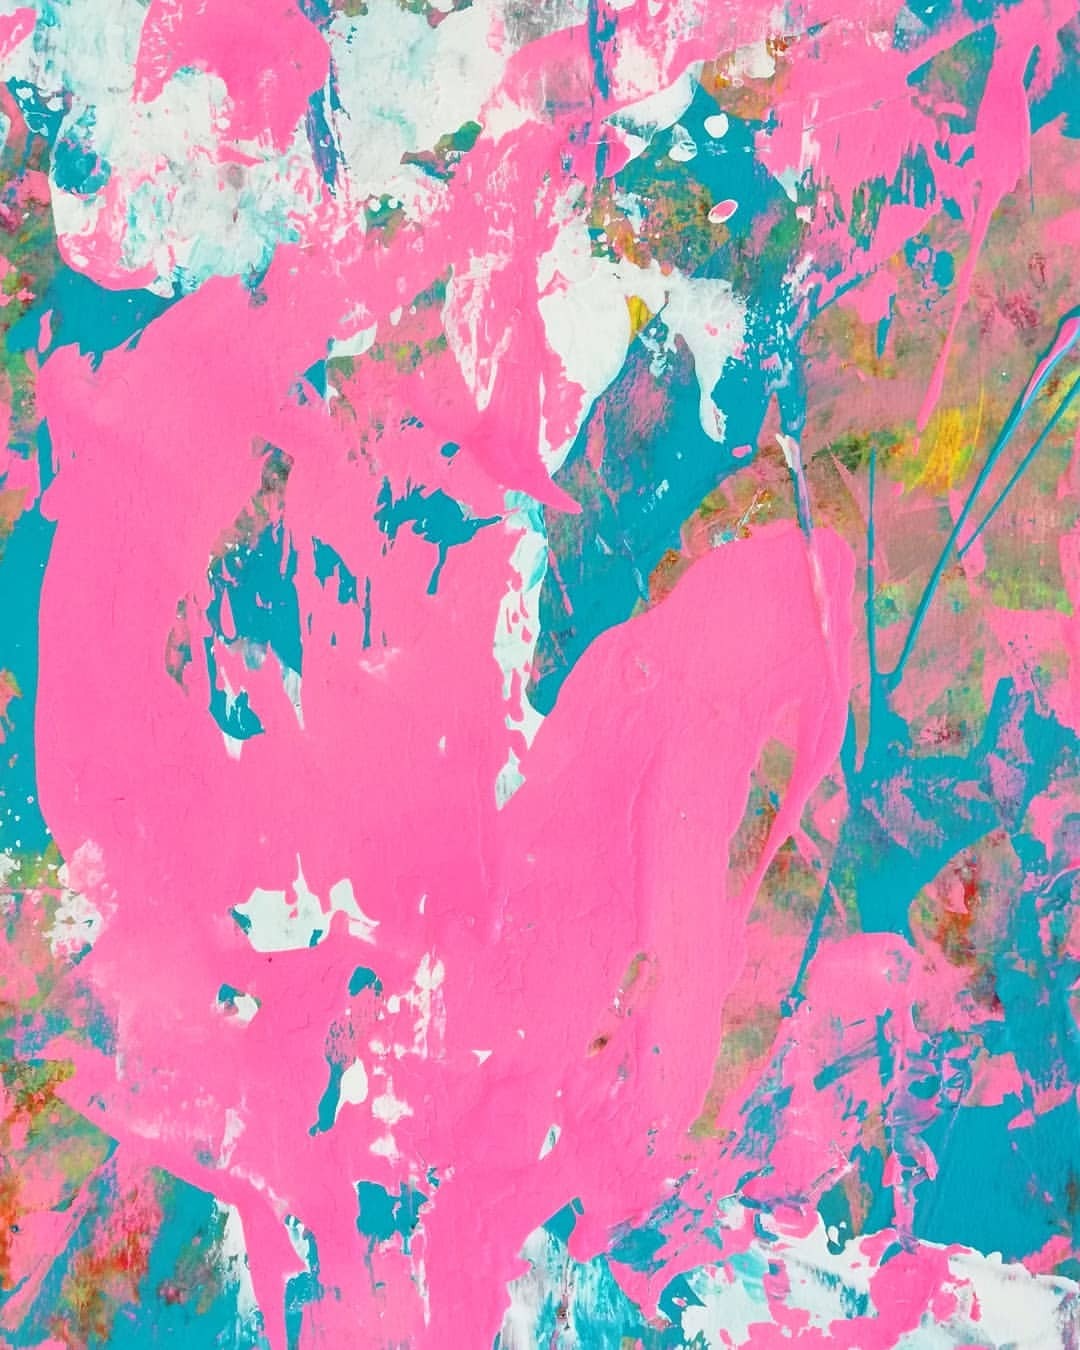 Sold out
「すべてピンクの仕業」
鮮やかなピンクを使ってみたくなりました。
#抽象画 #抽象画アート #抽象画っぽい #アクリル画 #アクリルアート #アクリル絵の具 #アート #アートワーク #絵画 #芸術 #ピンク #イメージ
#abstract #abstractart #abstractpainting #acrylic #acrylicpainting #art #artwork #pink...